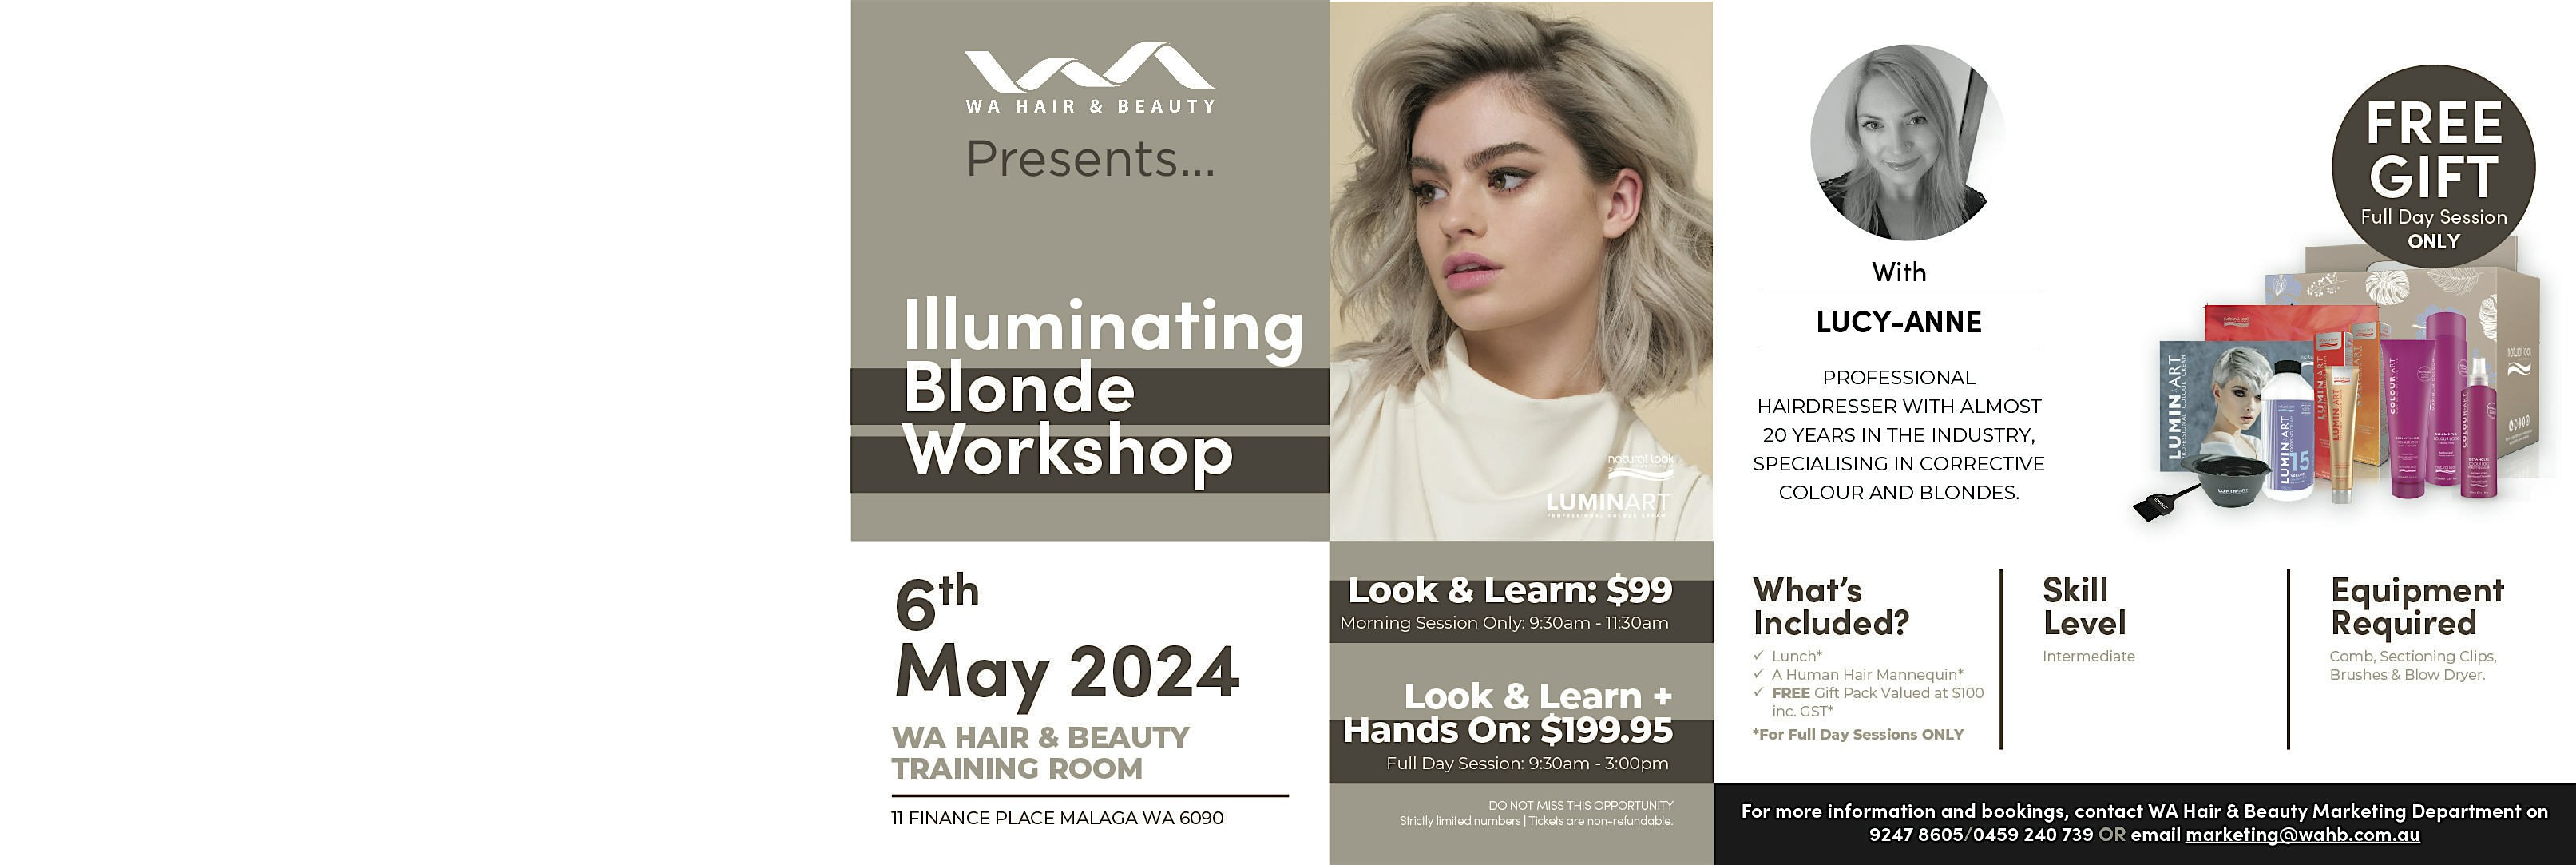 Illuminating Blonde Workshop – Look & Learn + Hands on